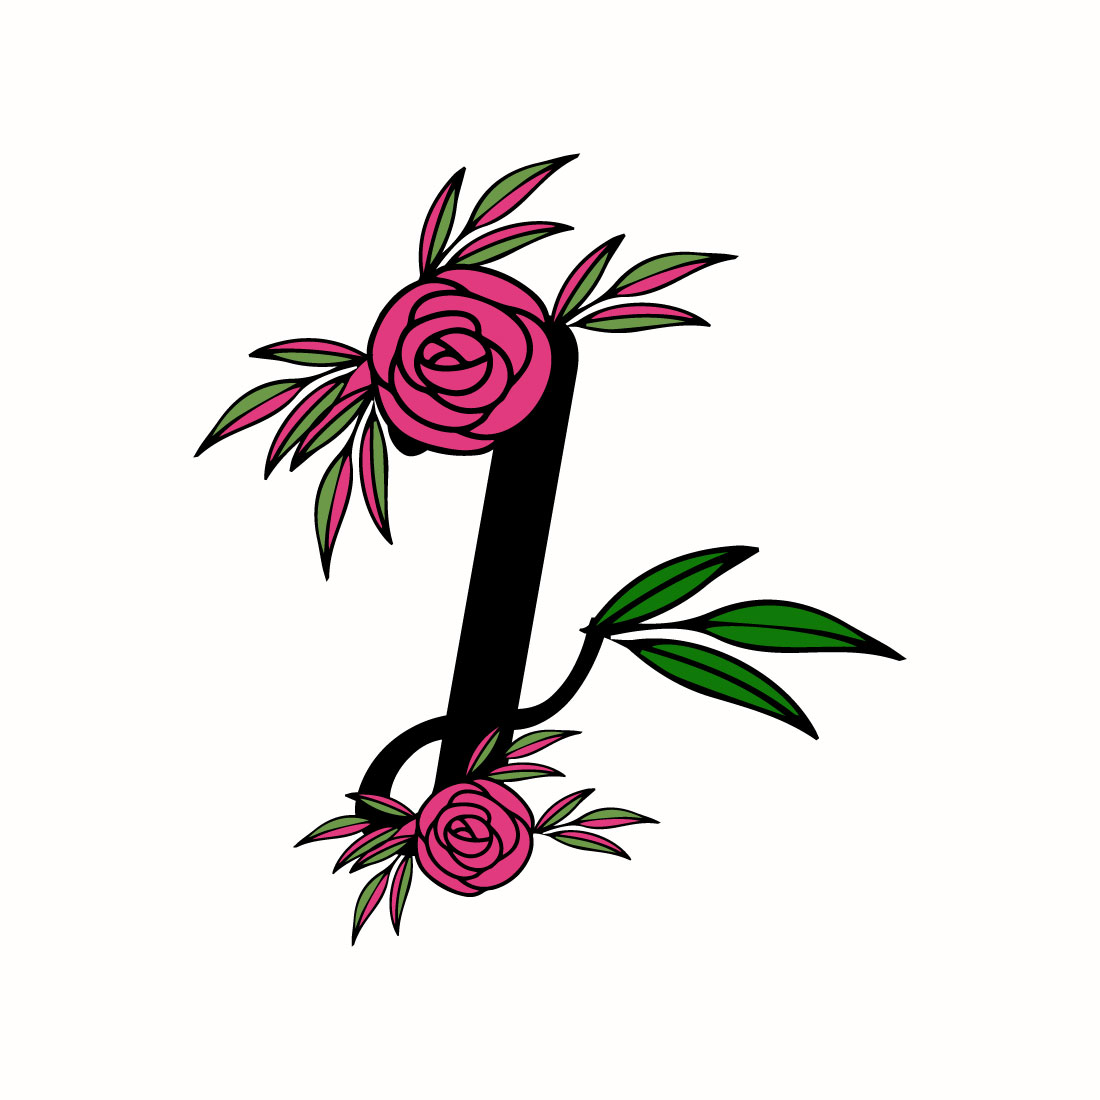 Free Rose J letter logo cover image.